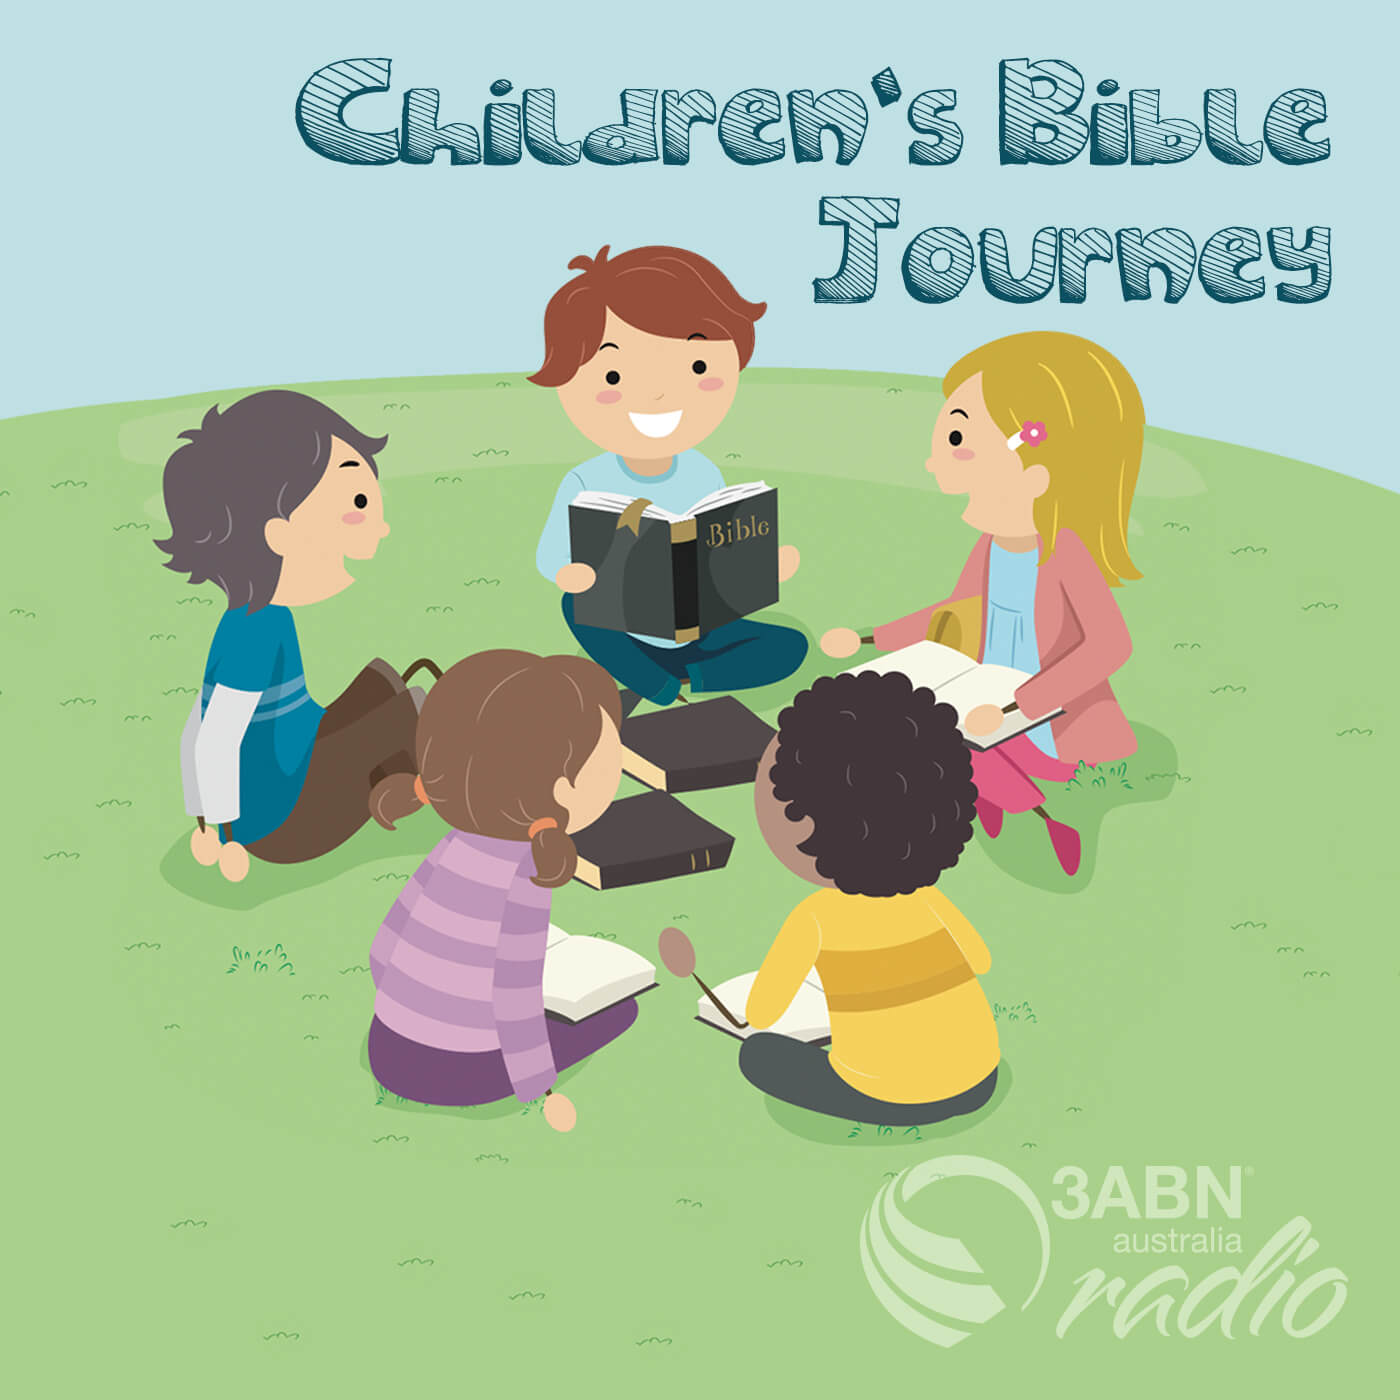 Children's Bible Journey - 2187